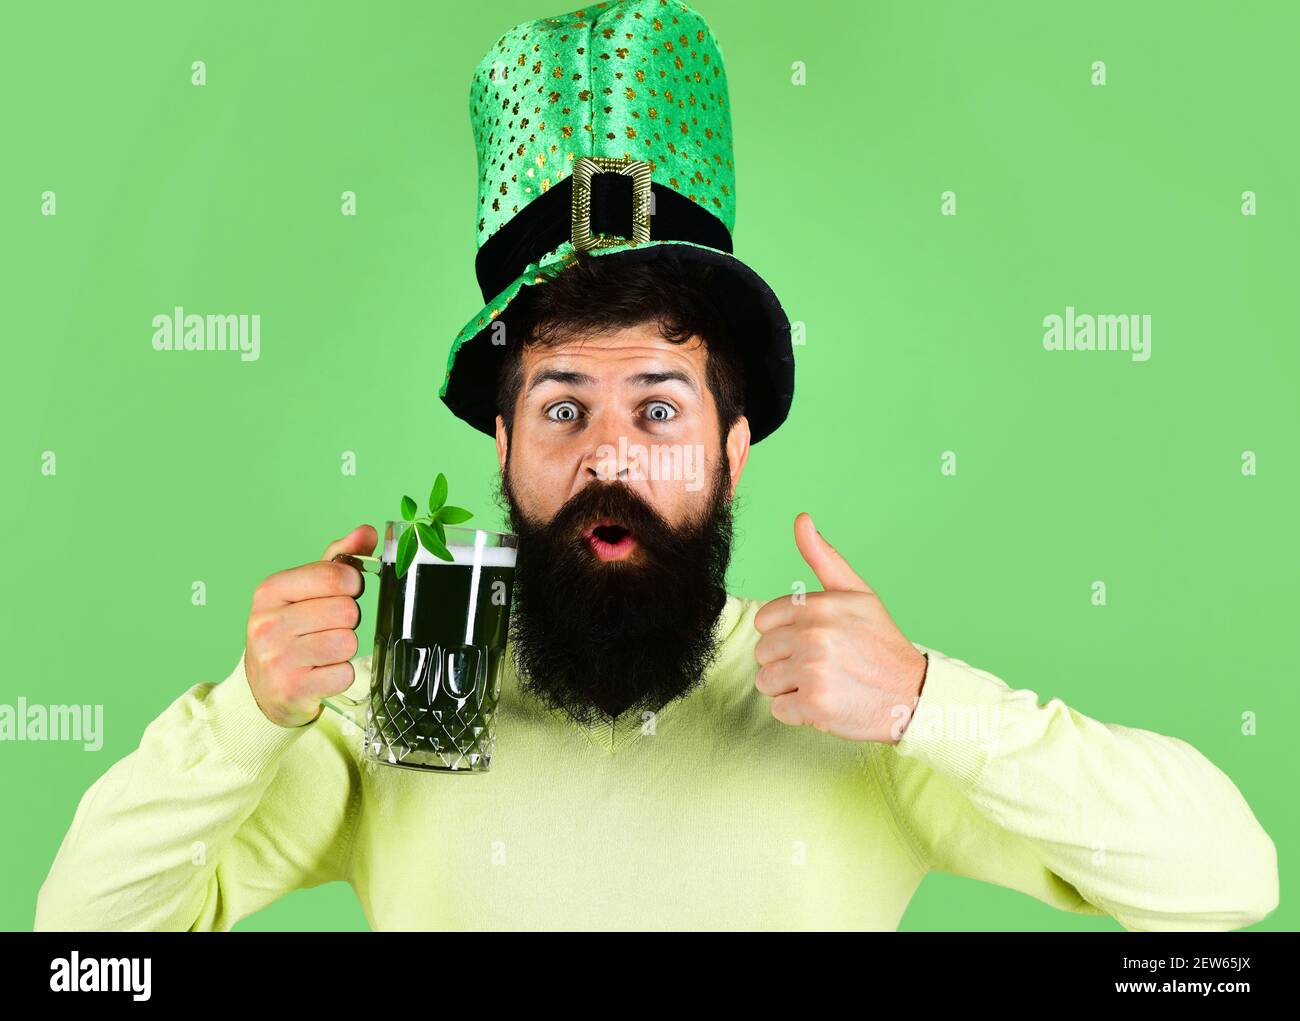 Irish Yoga Drunk New Orleans St Patricks Day Funny T Shirt Green - Size XL